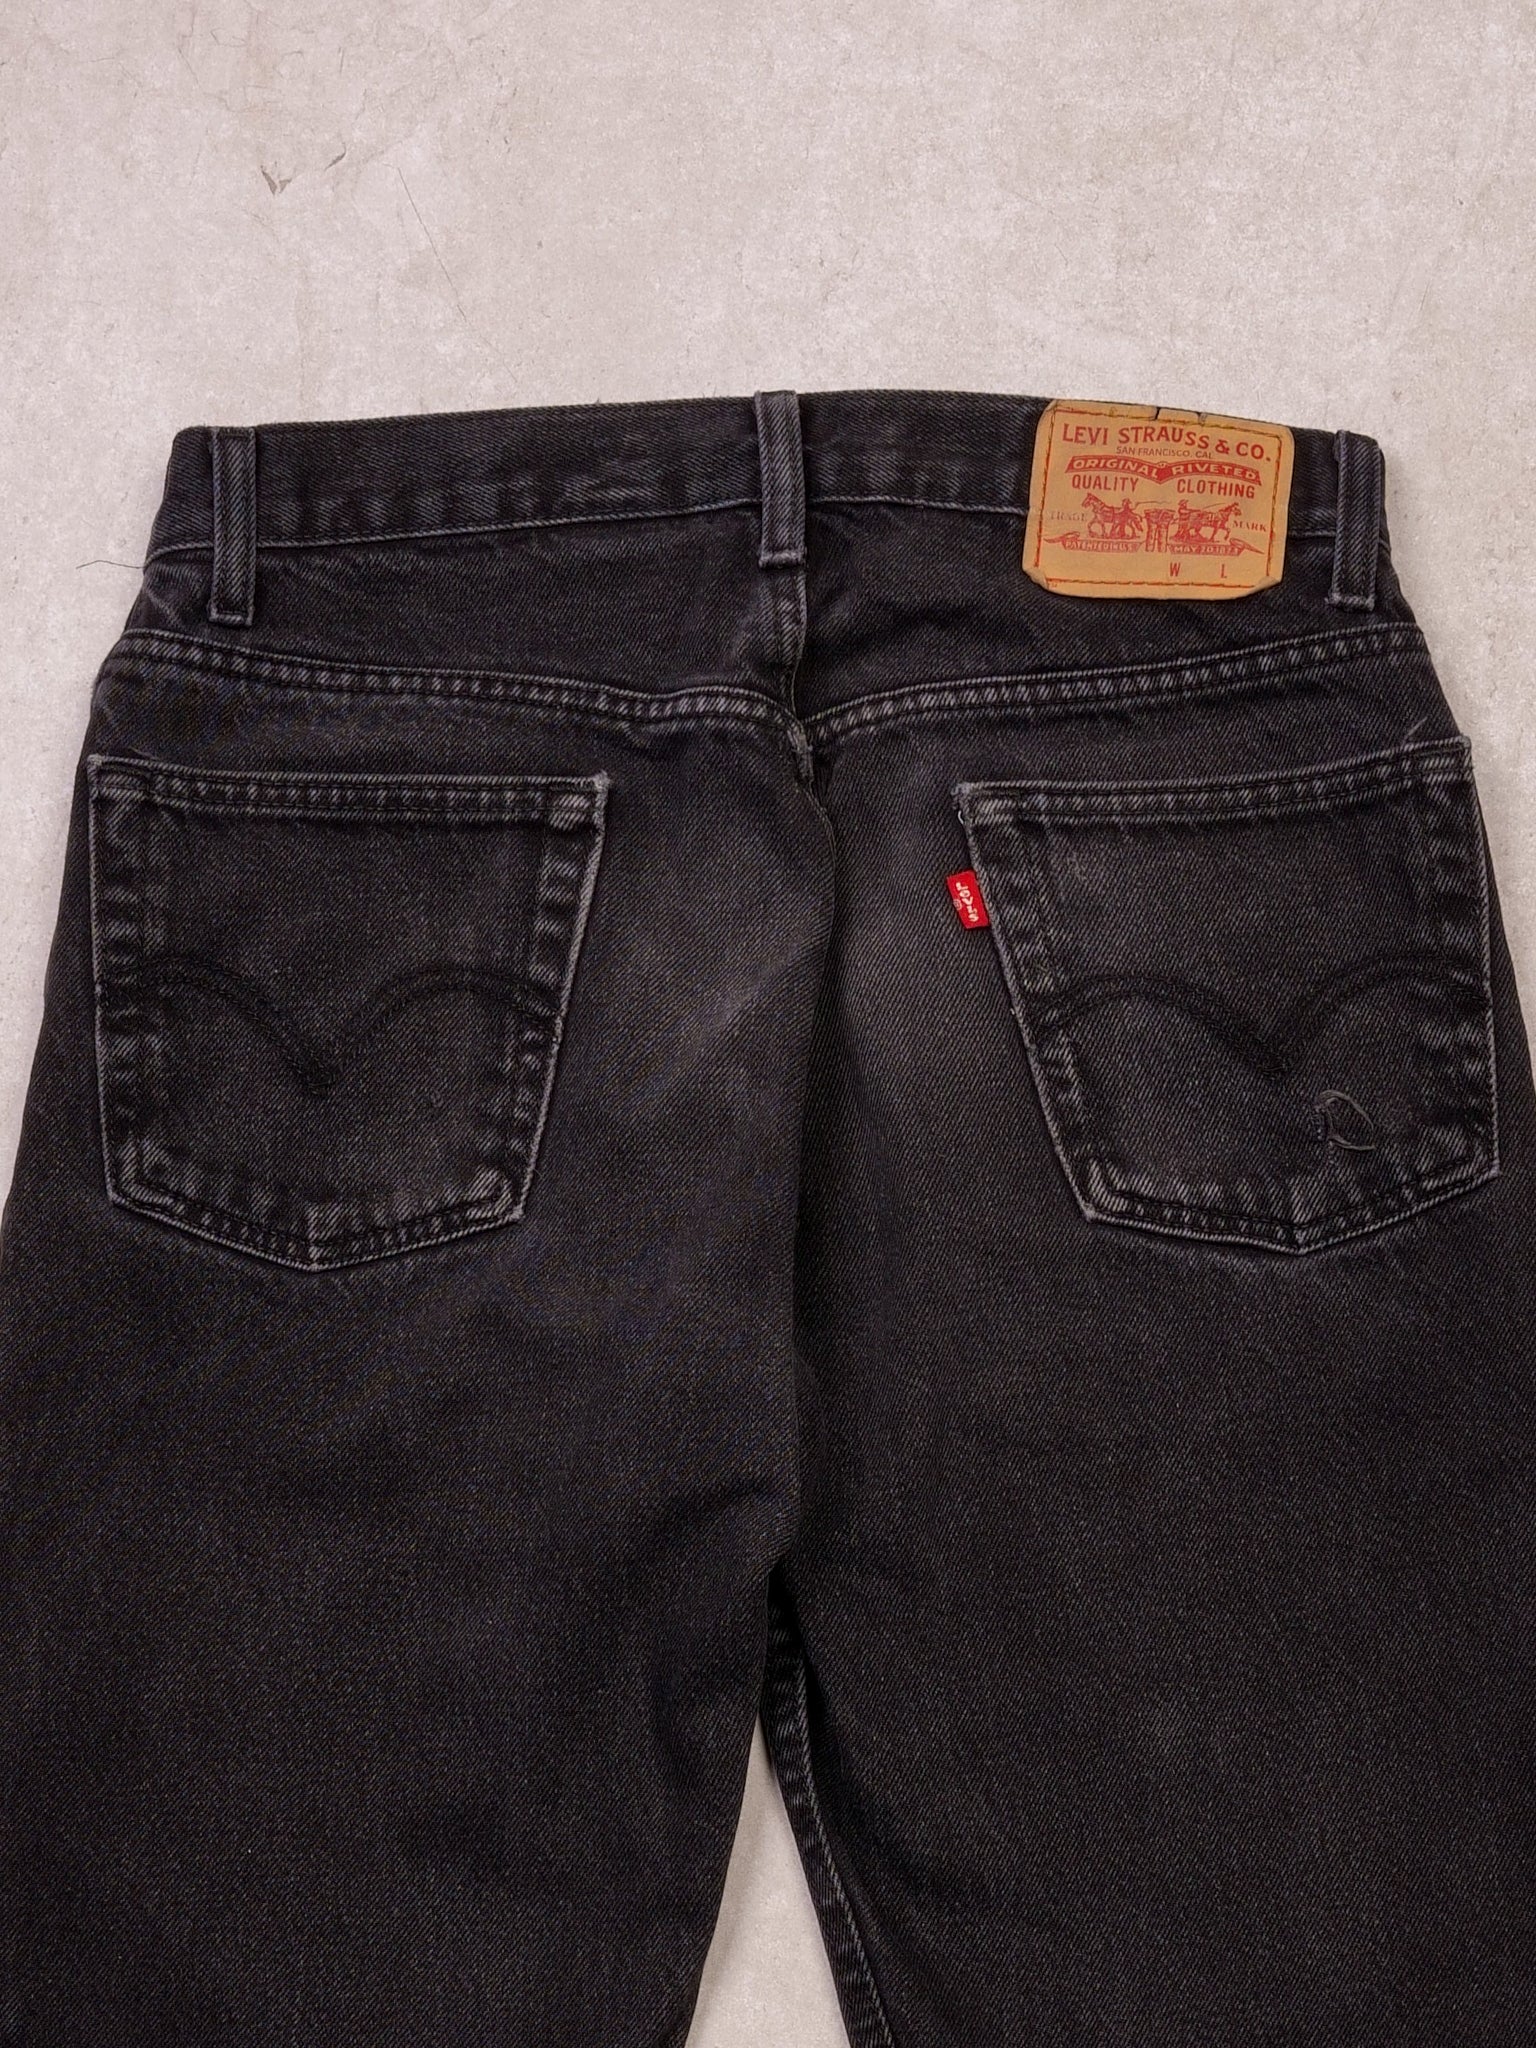 Vintage 90s Washed Black Levi's 505 Original Fit Denim Jeans (30x31)